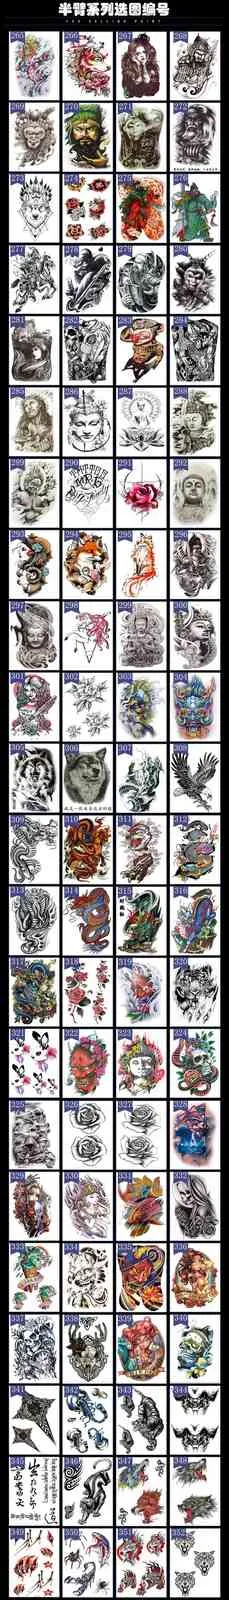 arm tattoos 265-352